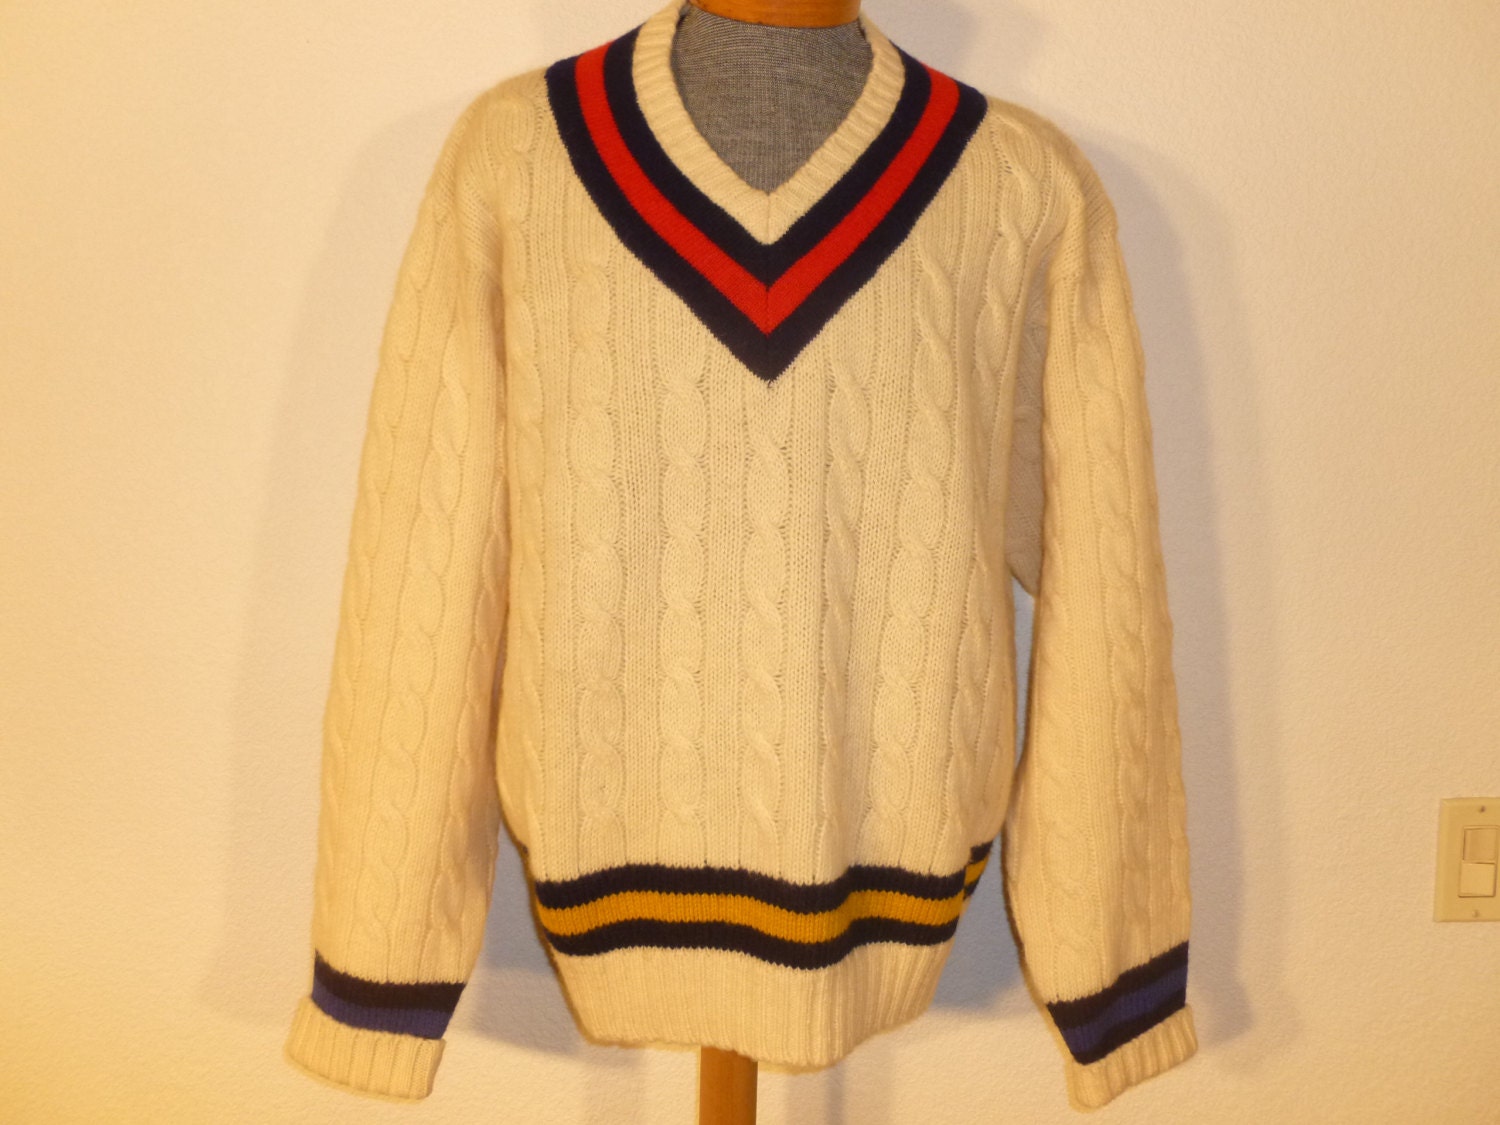 Vintage 70s College Wool Sweater V-neck by TweedersMercantile